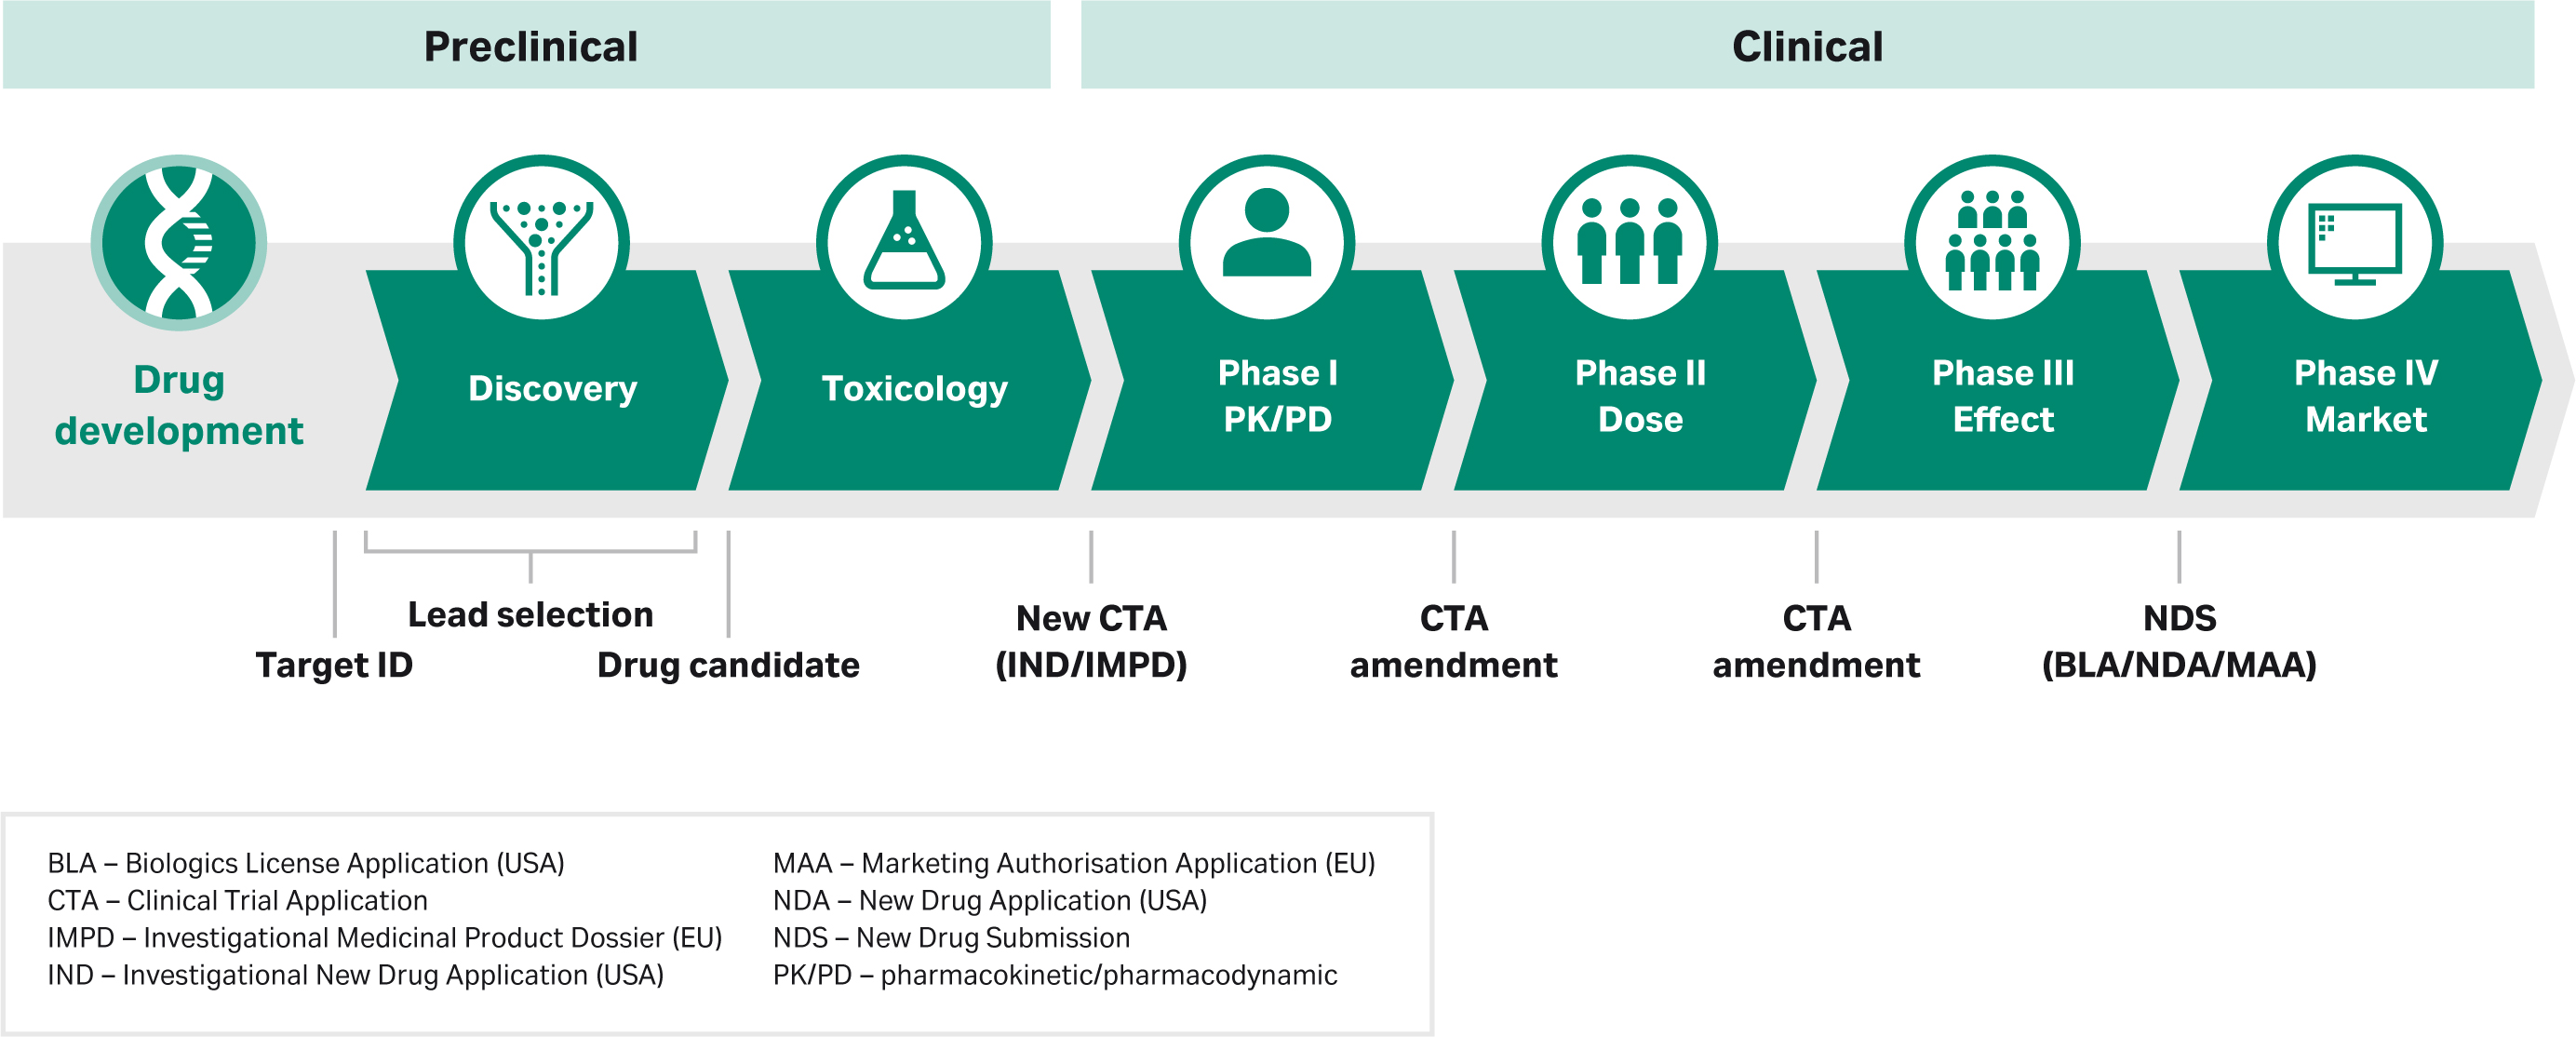 Drug development process overview with US regulatory milestones